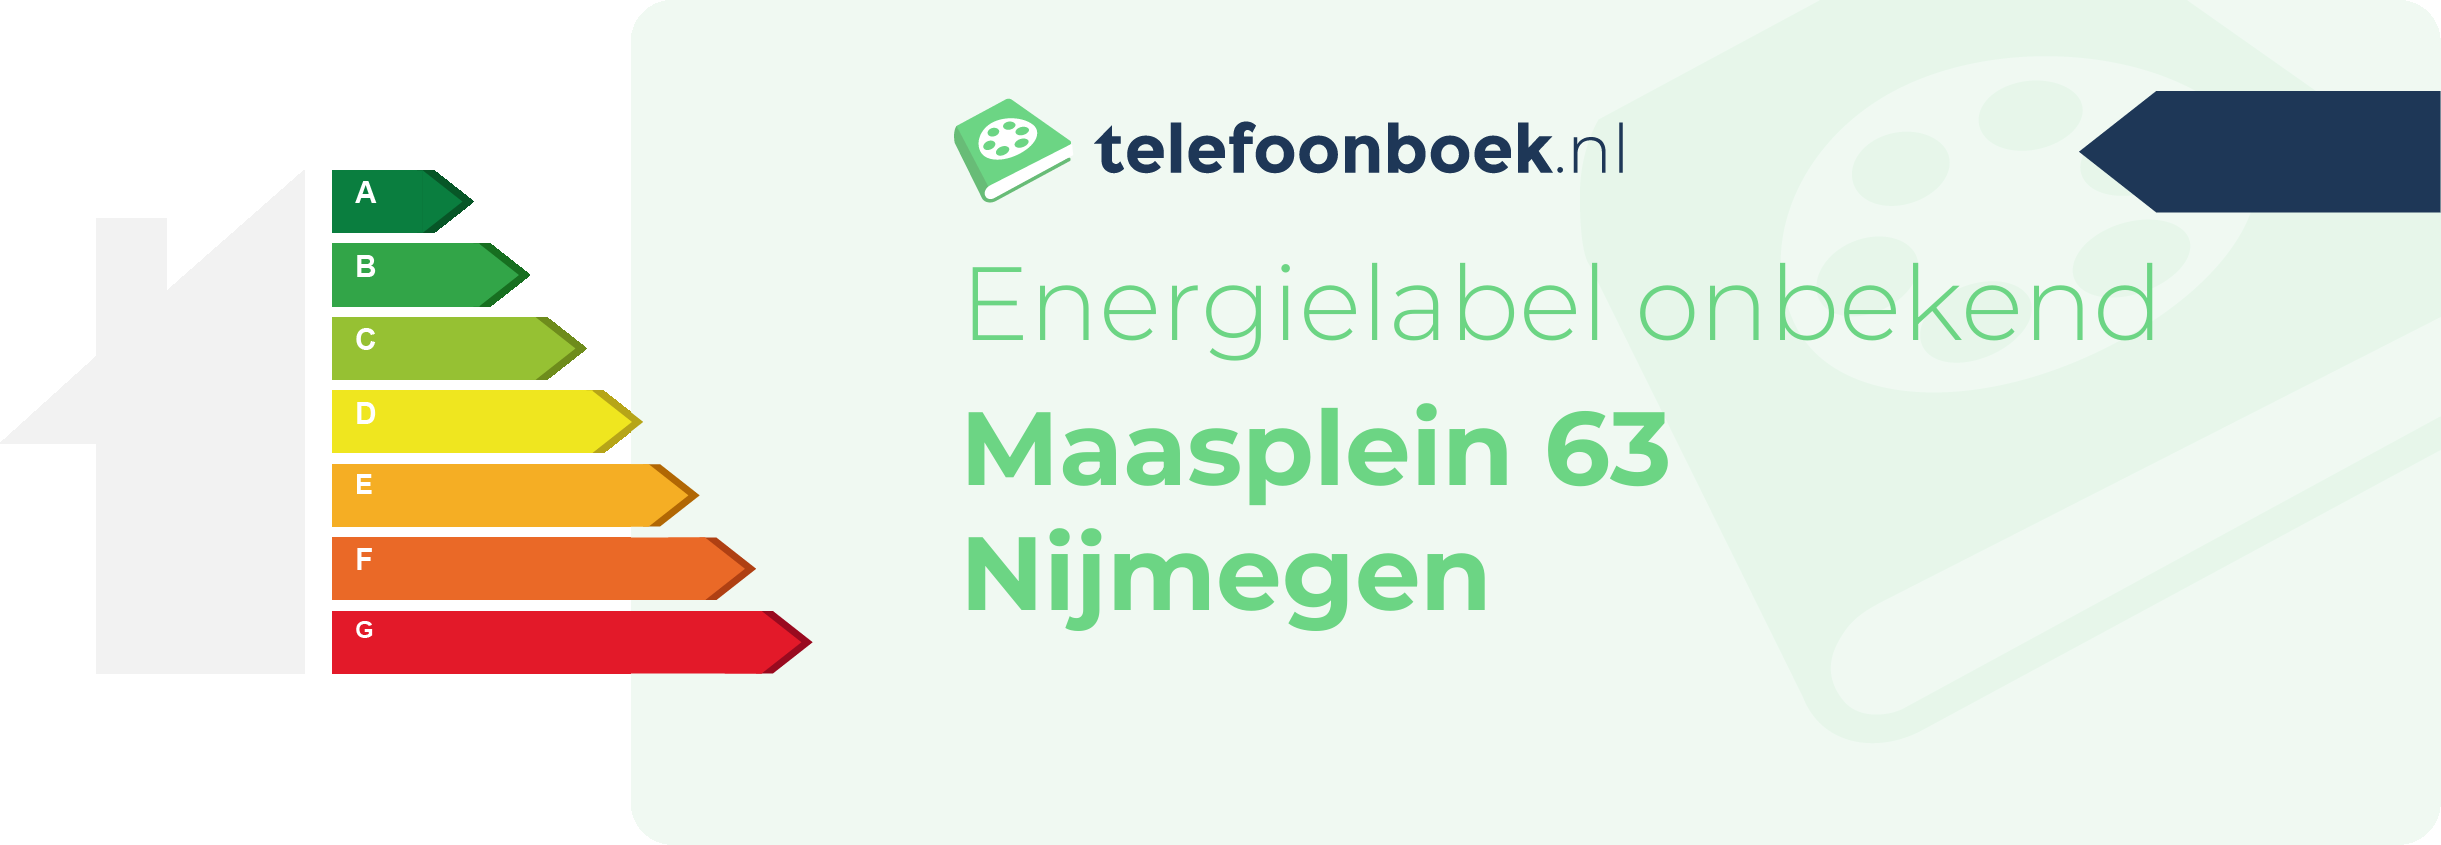 Energielabel Maasplein 63 Nijmegen